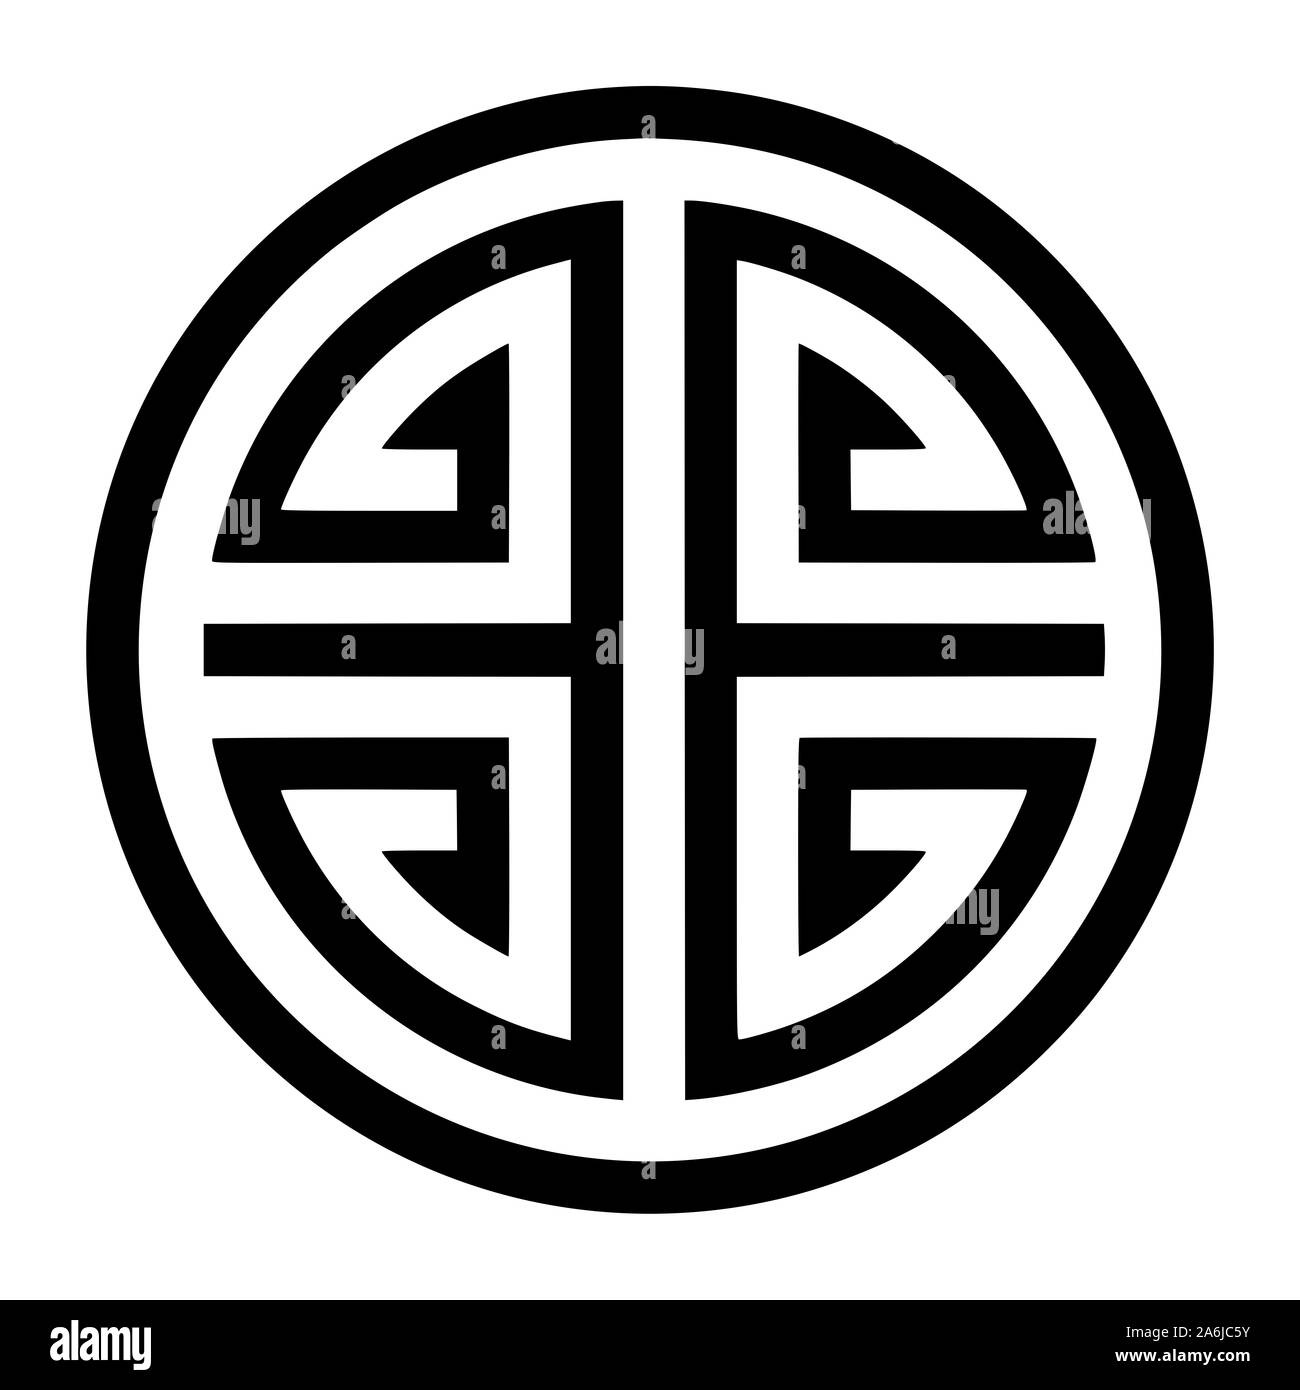 Chinese good luck symbol Stock Photo